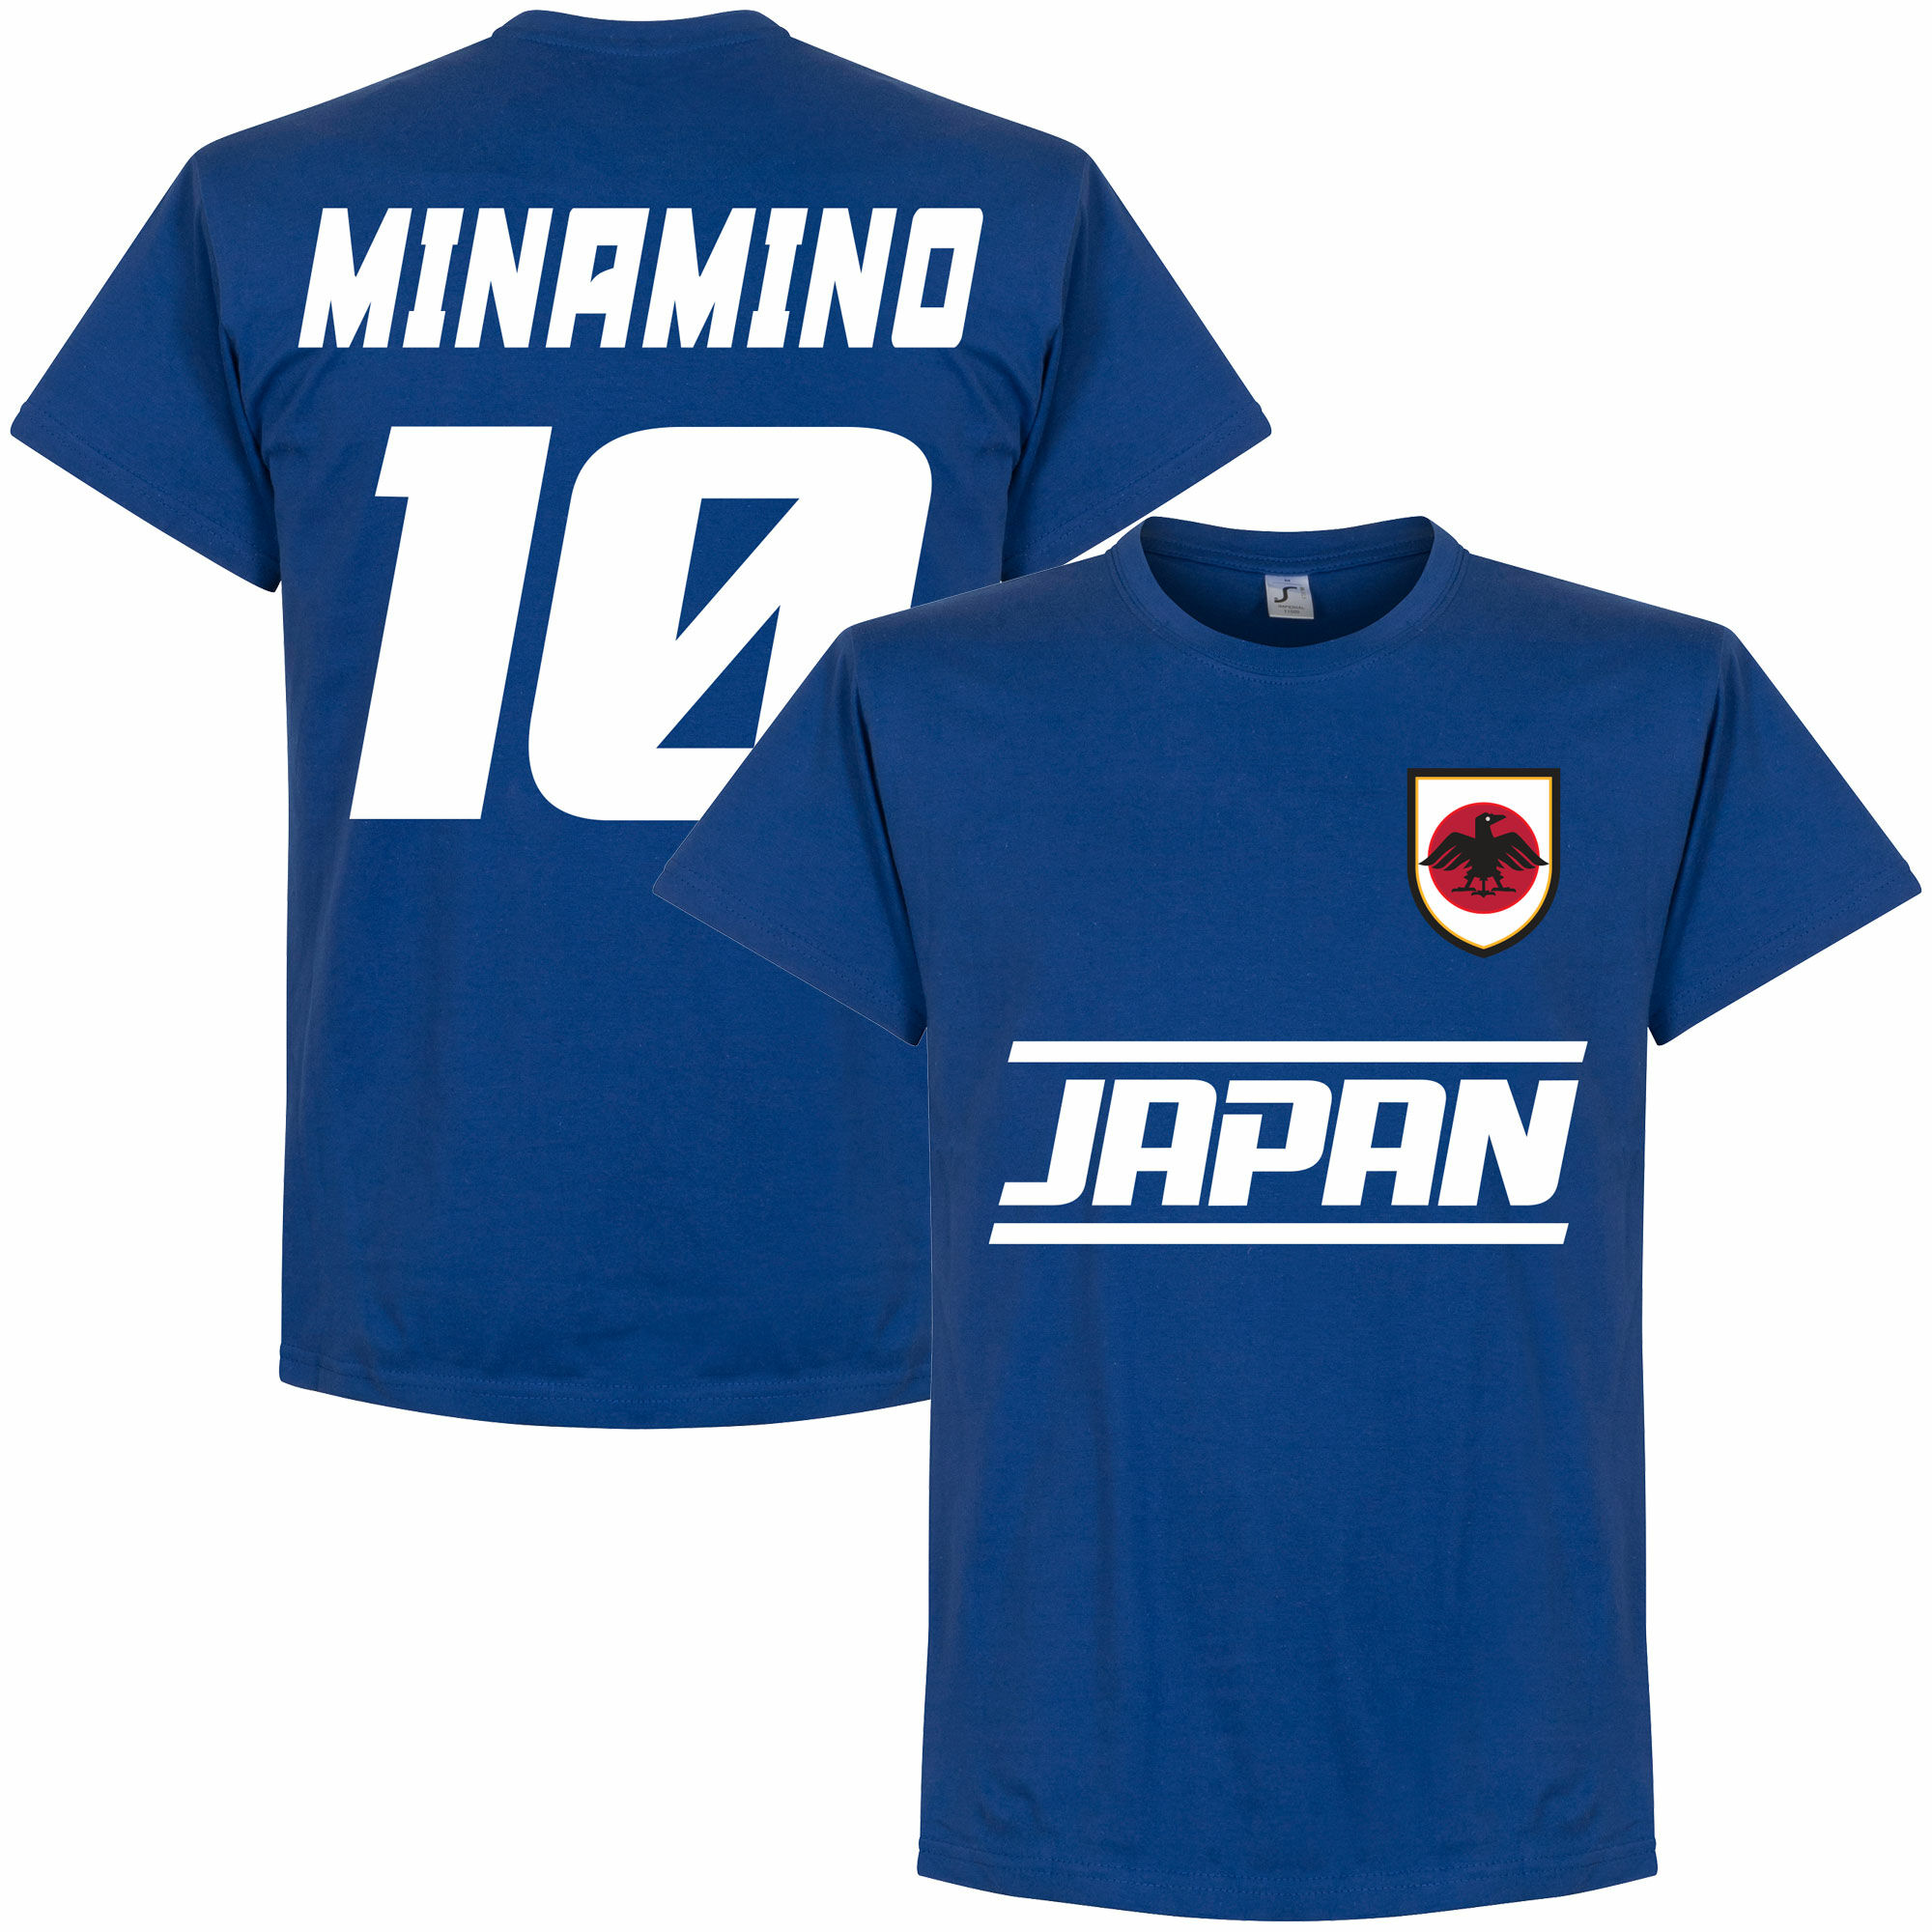 Japonsko - Tričko - Takumi Minamino, číslo 10, modré